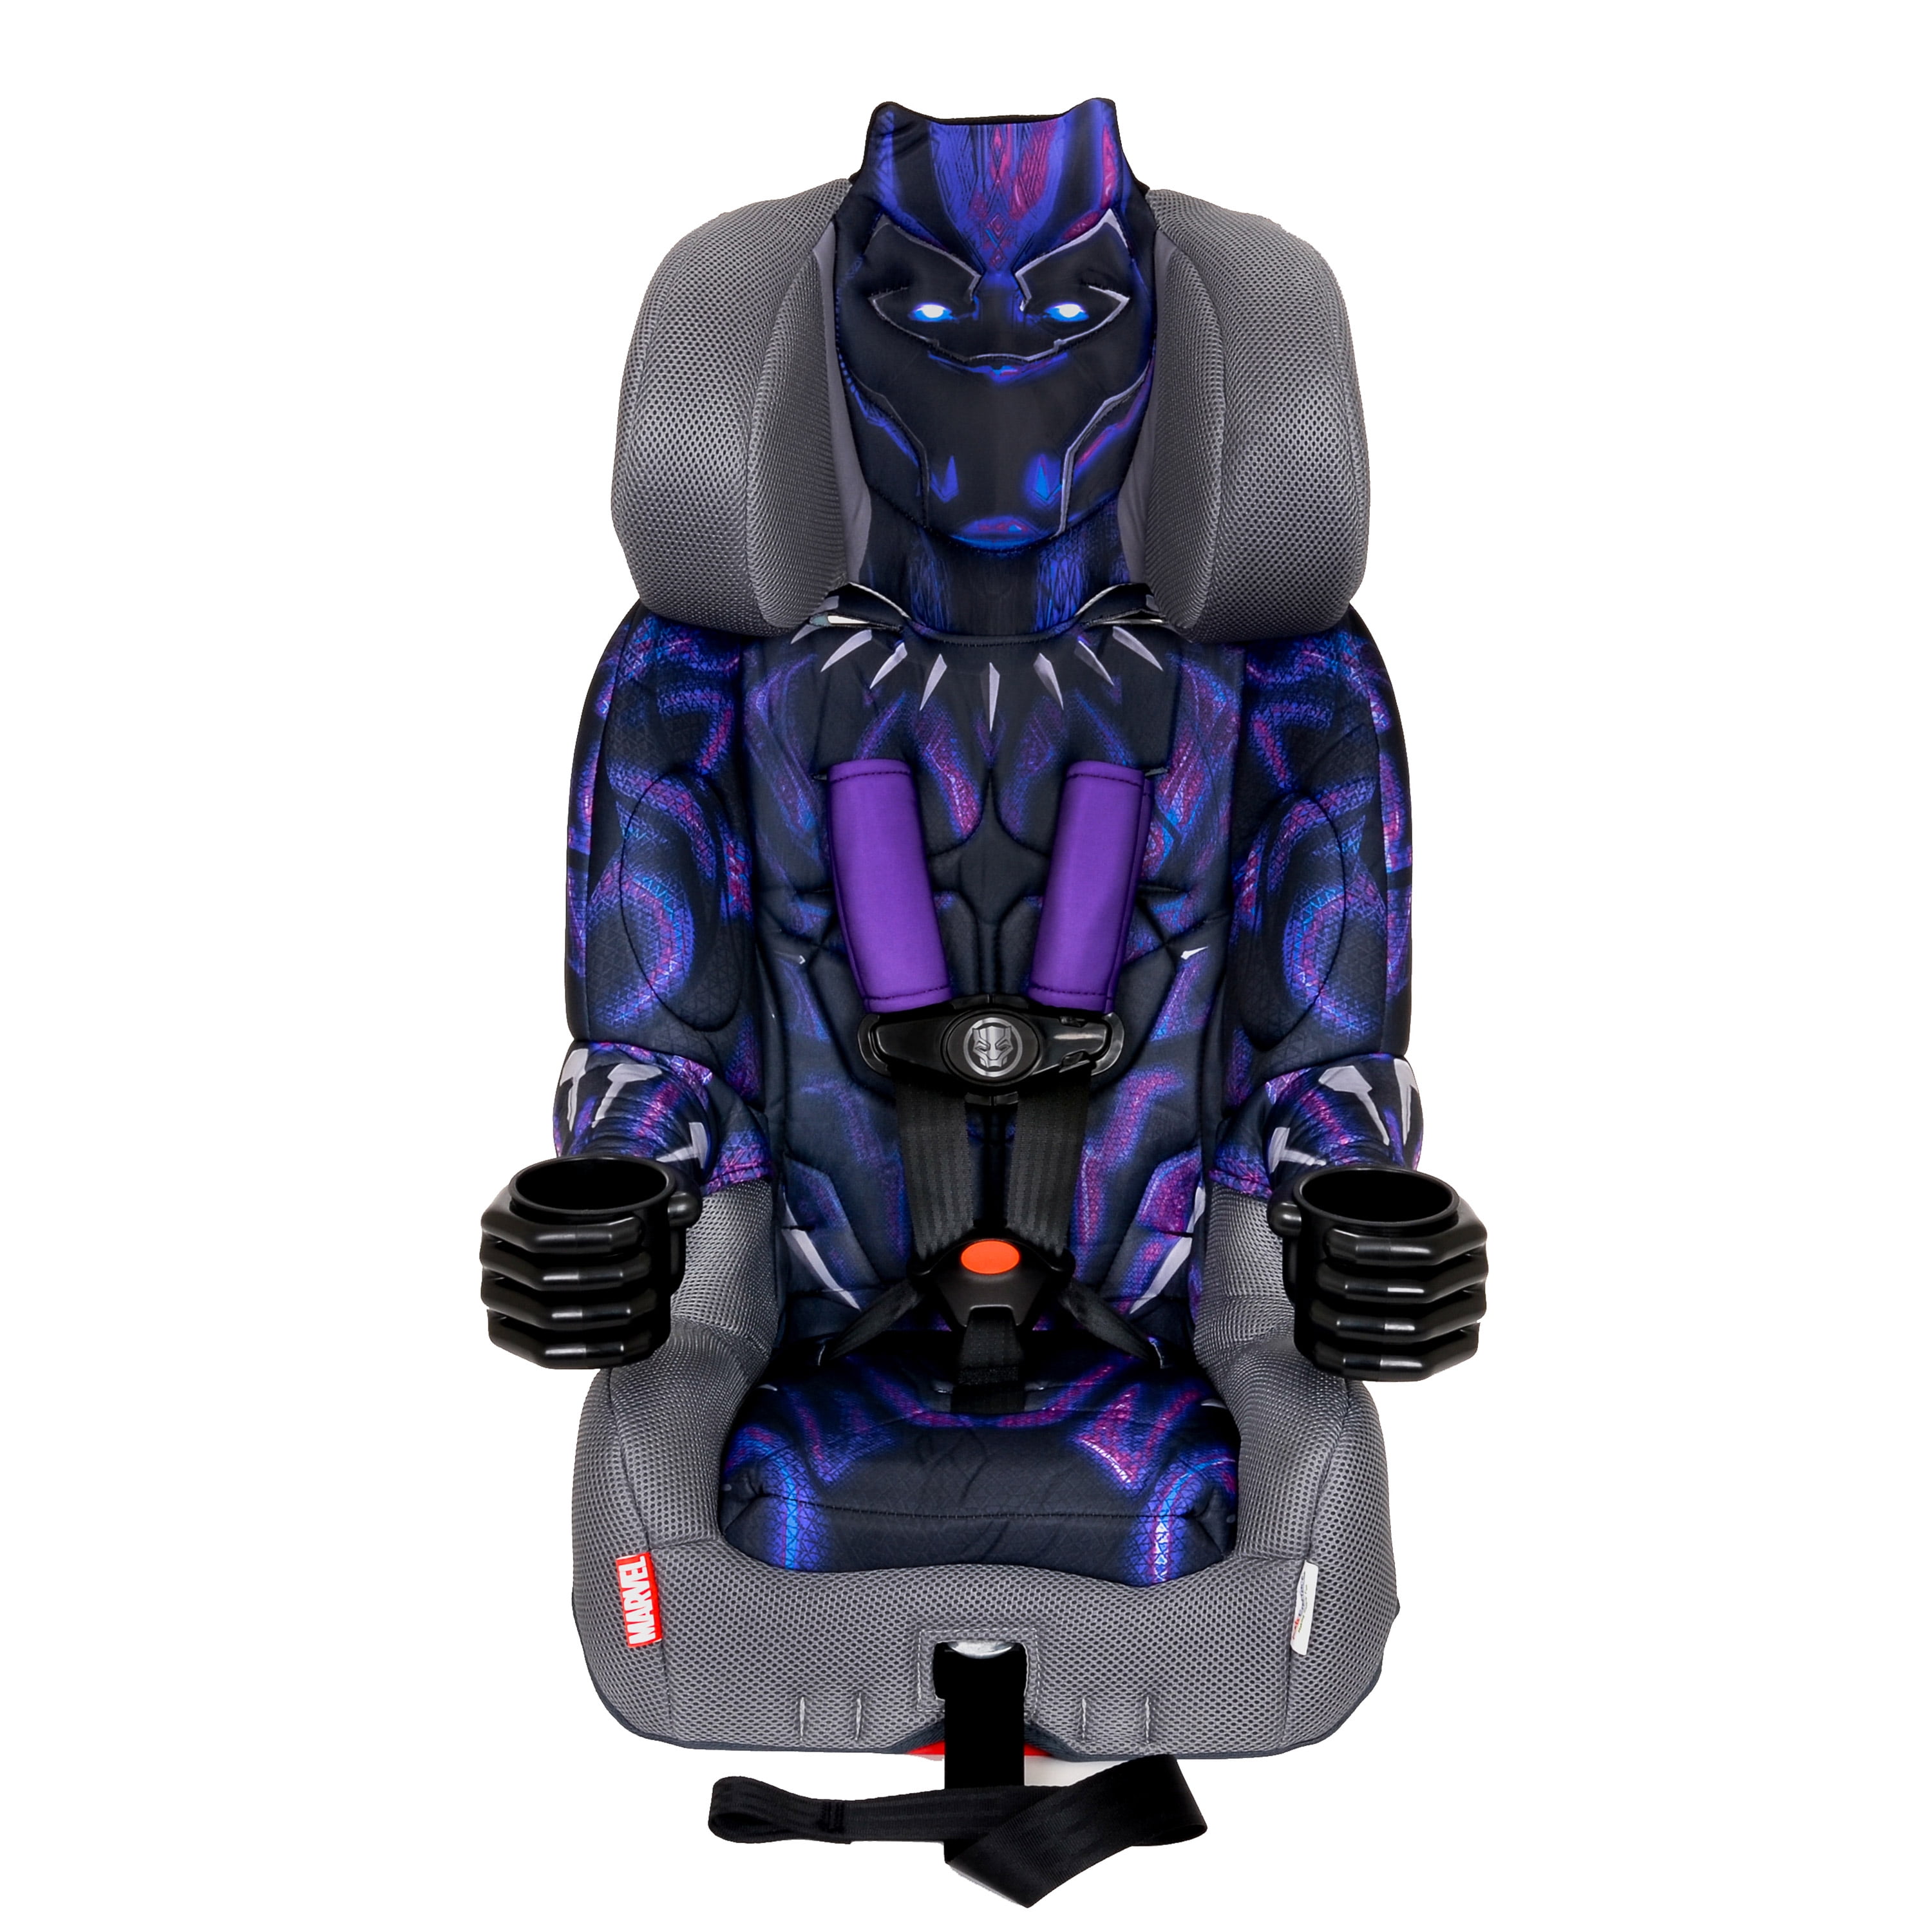 KidsEmbrace Combination Booster Car Seat, Marvel Black